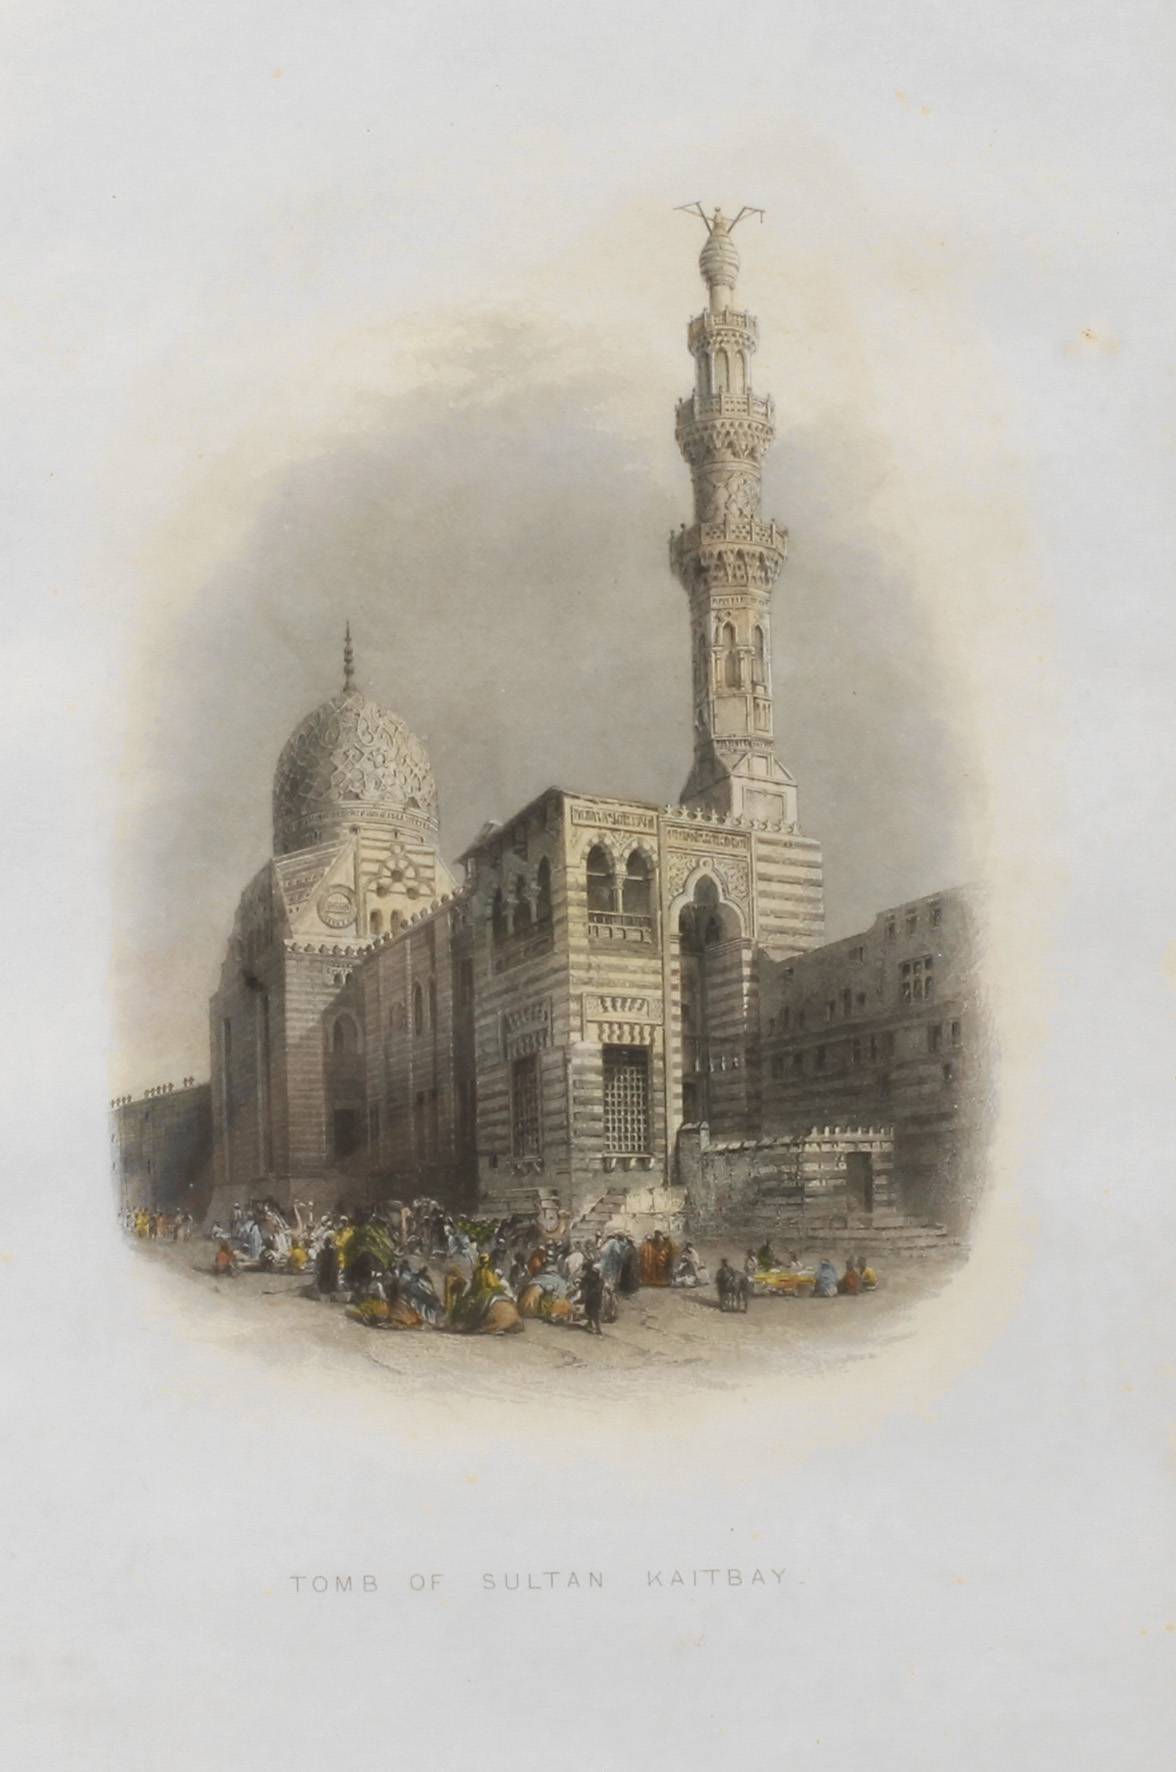 Mausoleum Qaitbay in Kairo